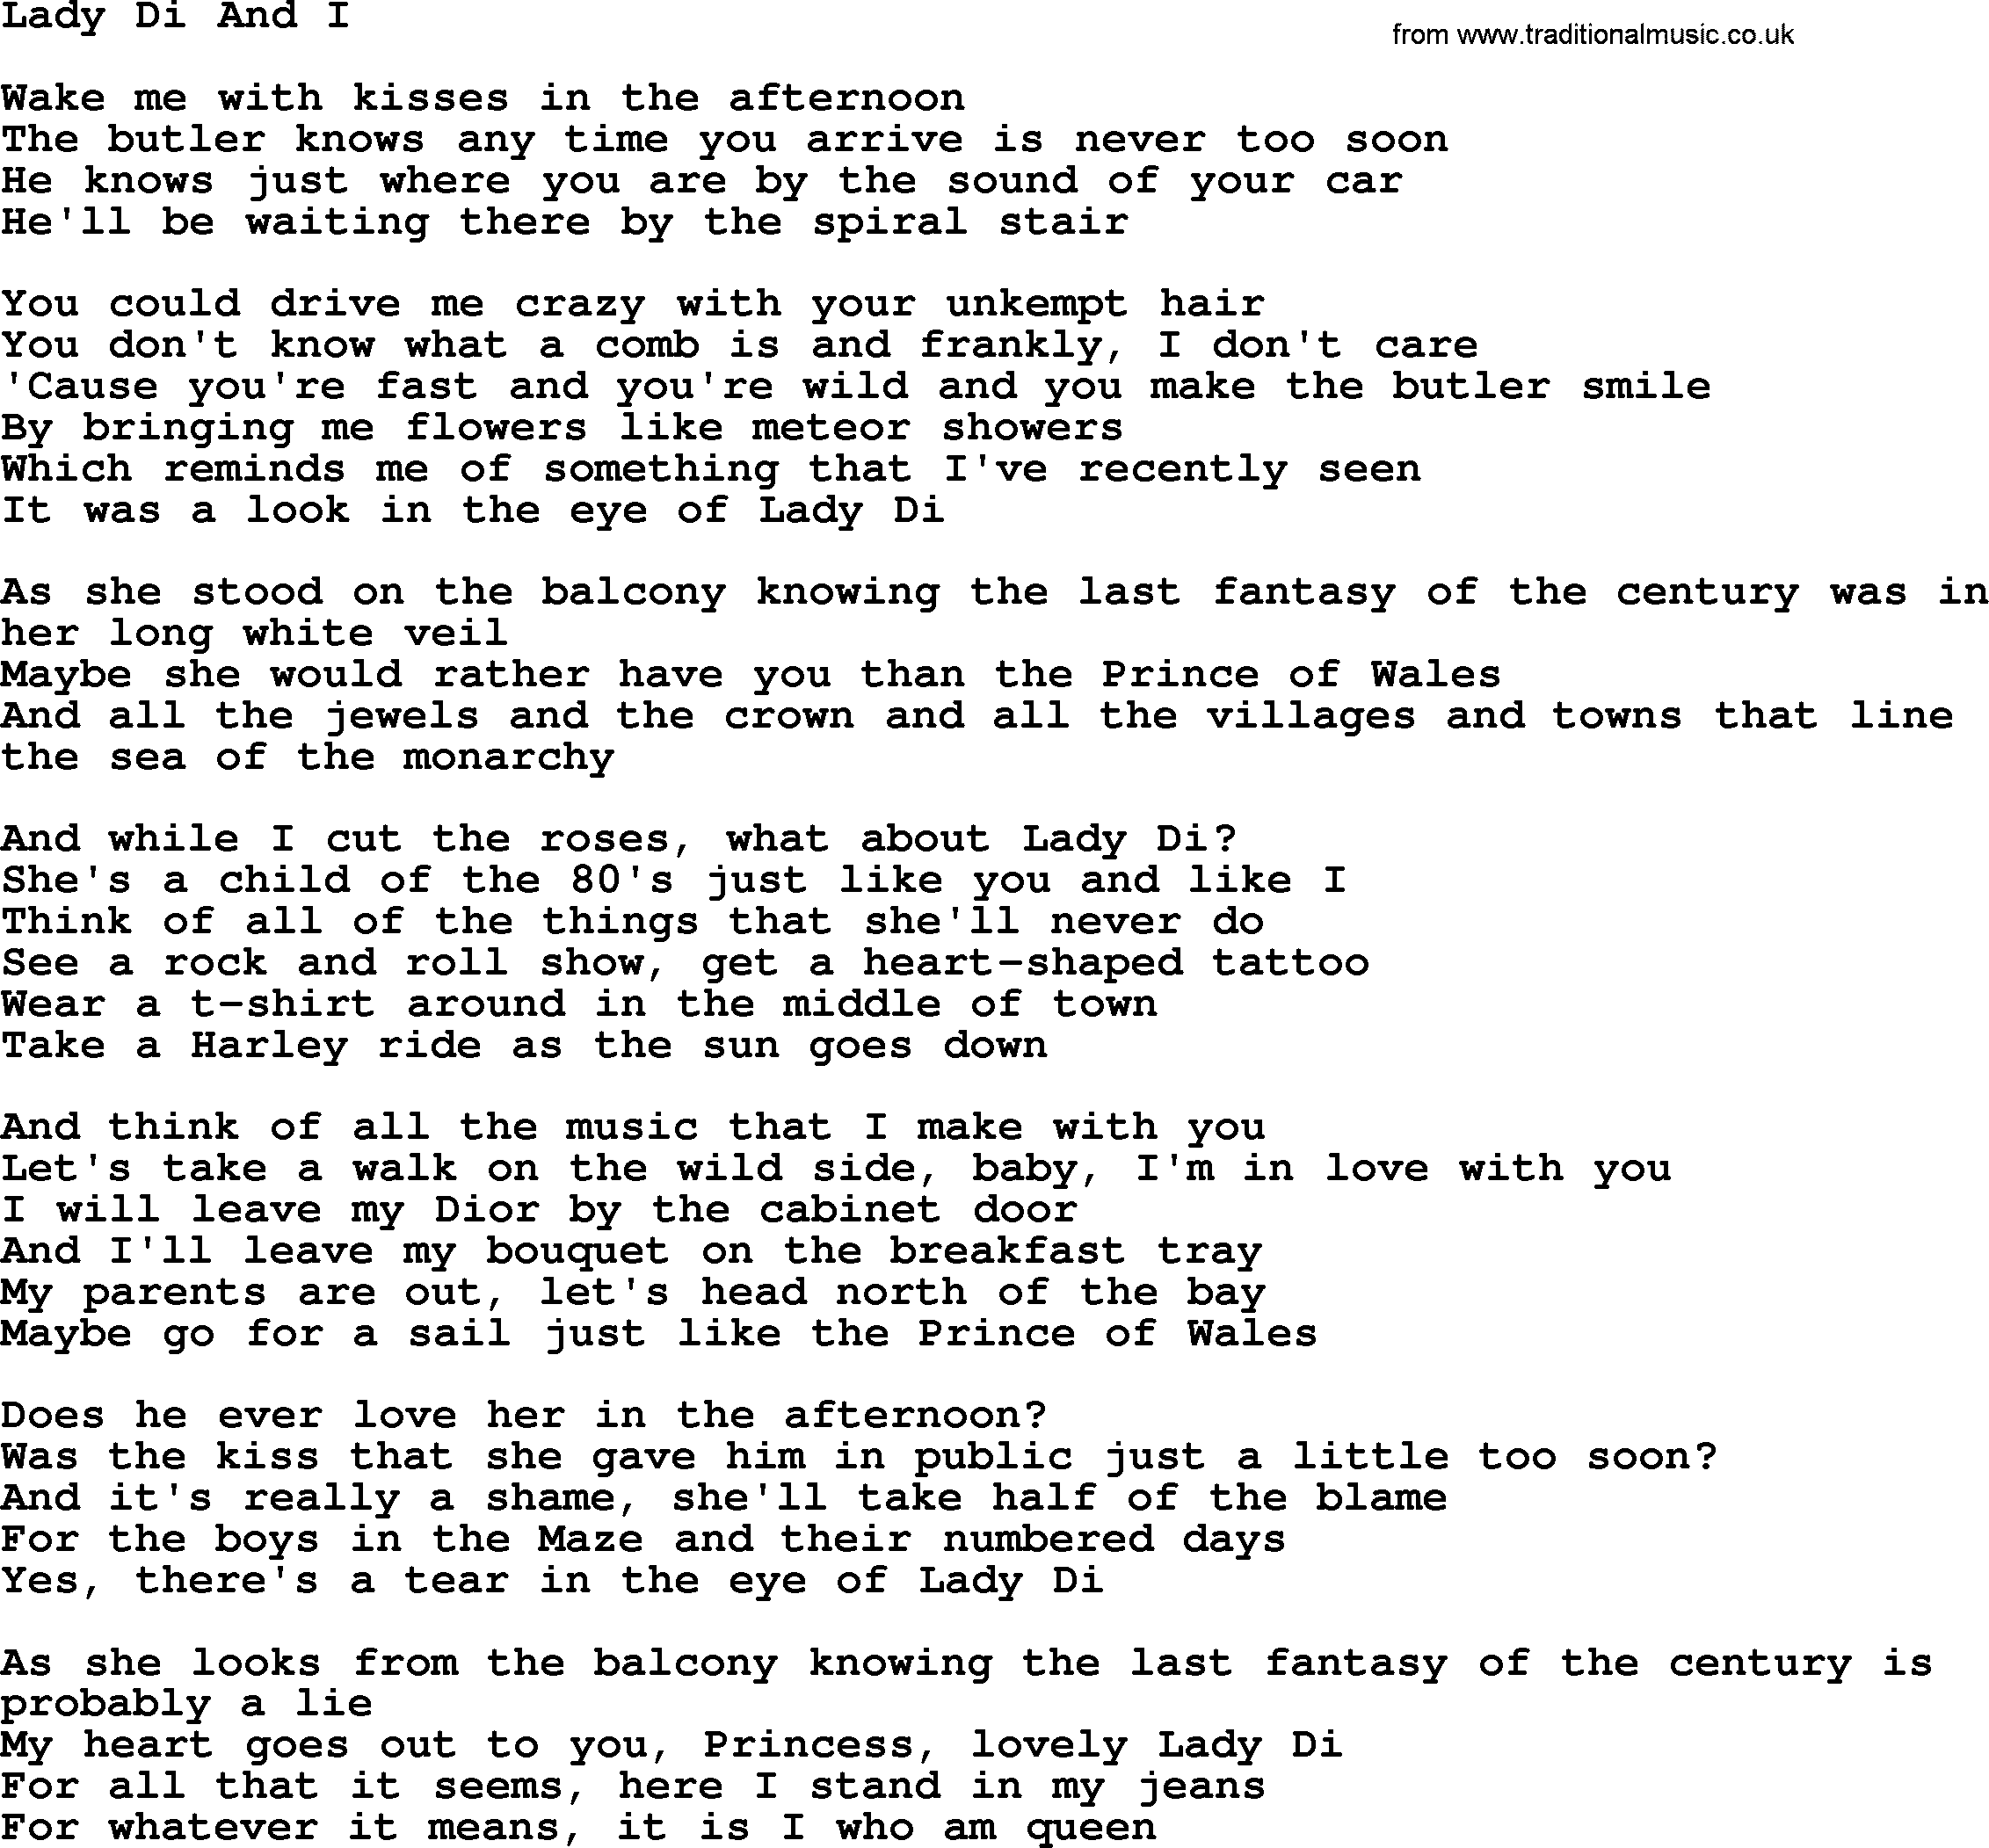 Joan Baez song Lady Di And I, lyrics